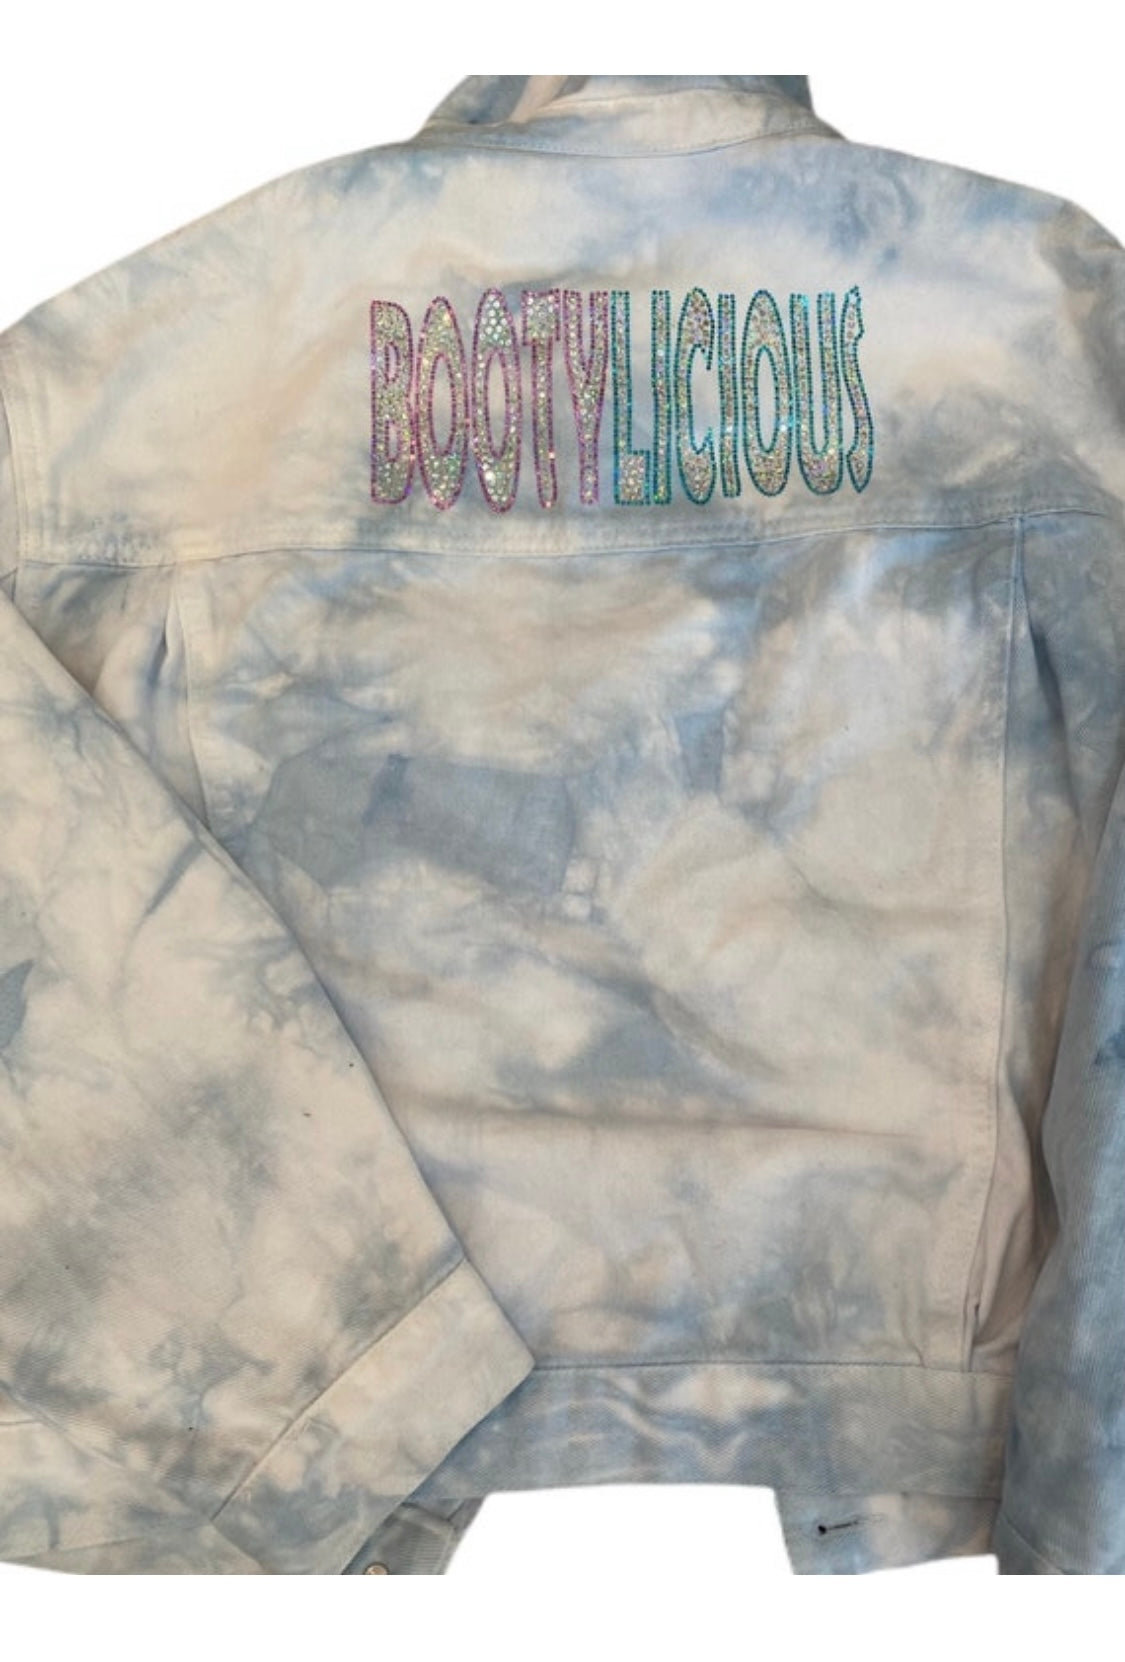 Bootylicious Denim Jacket